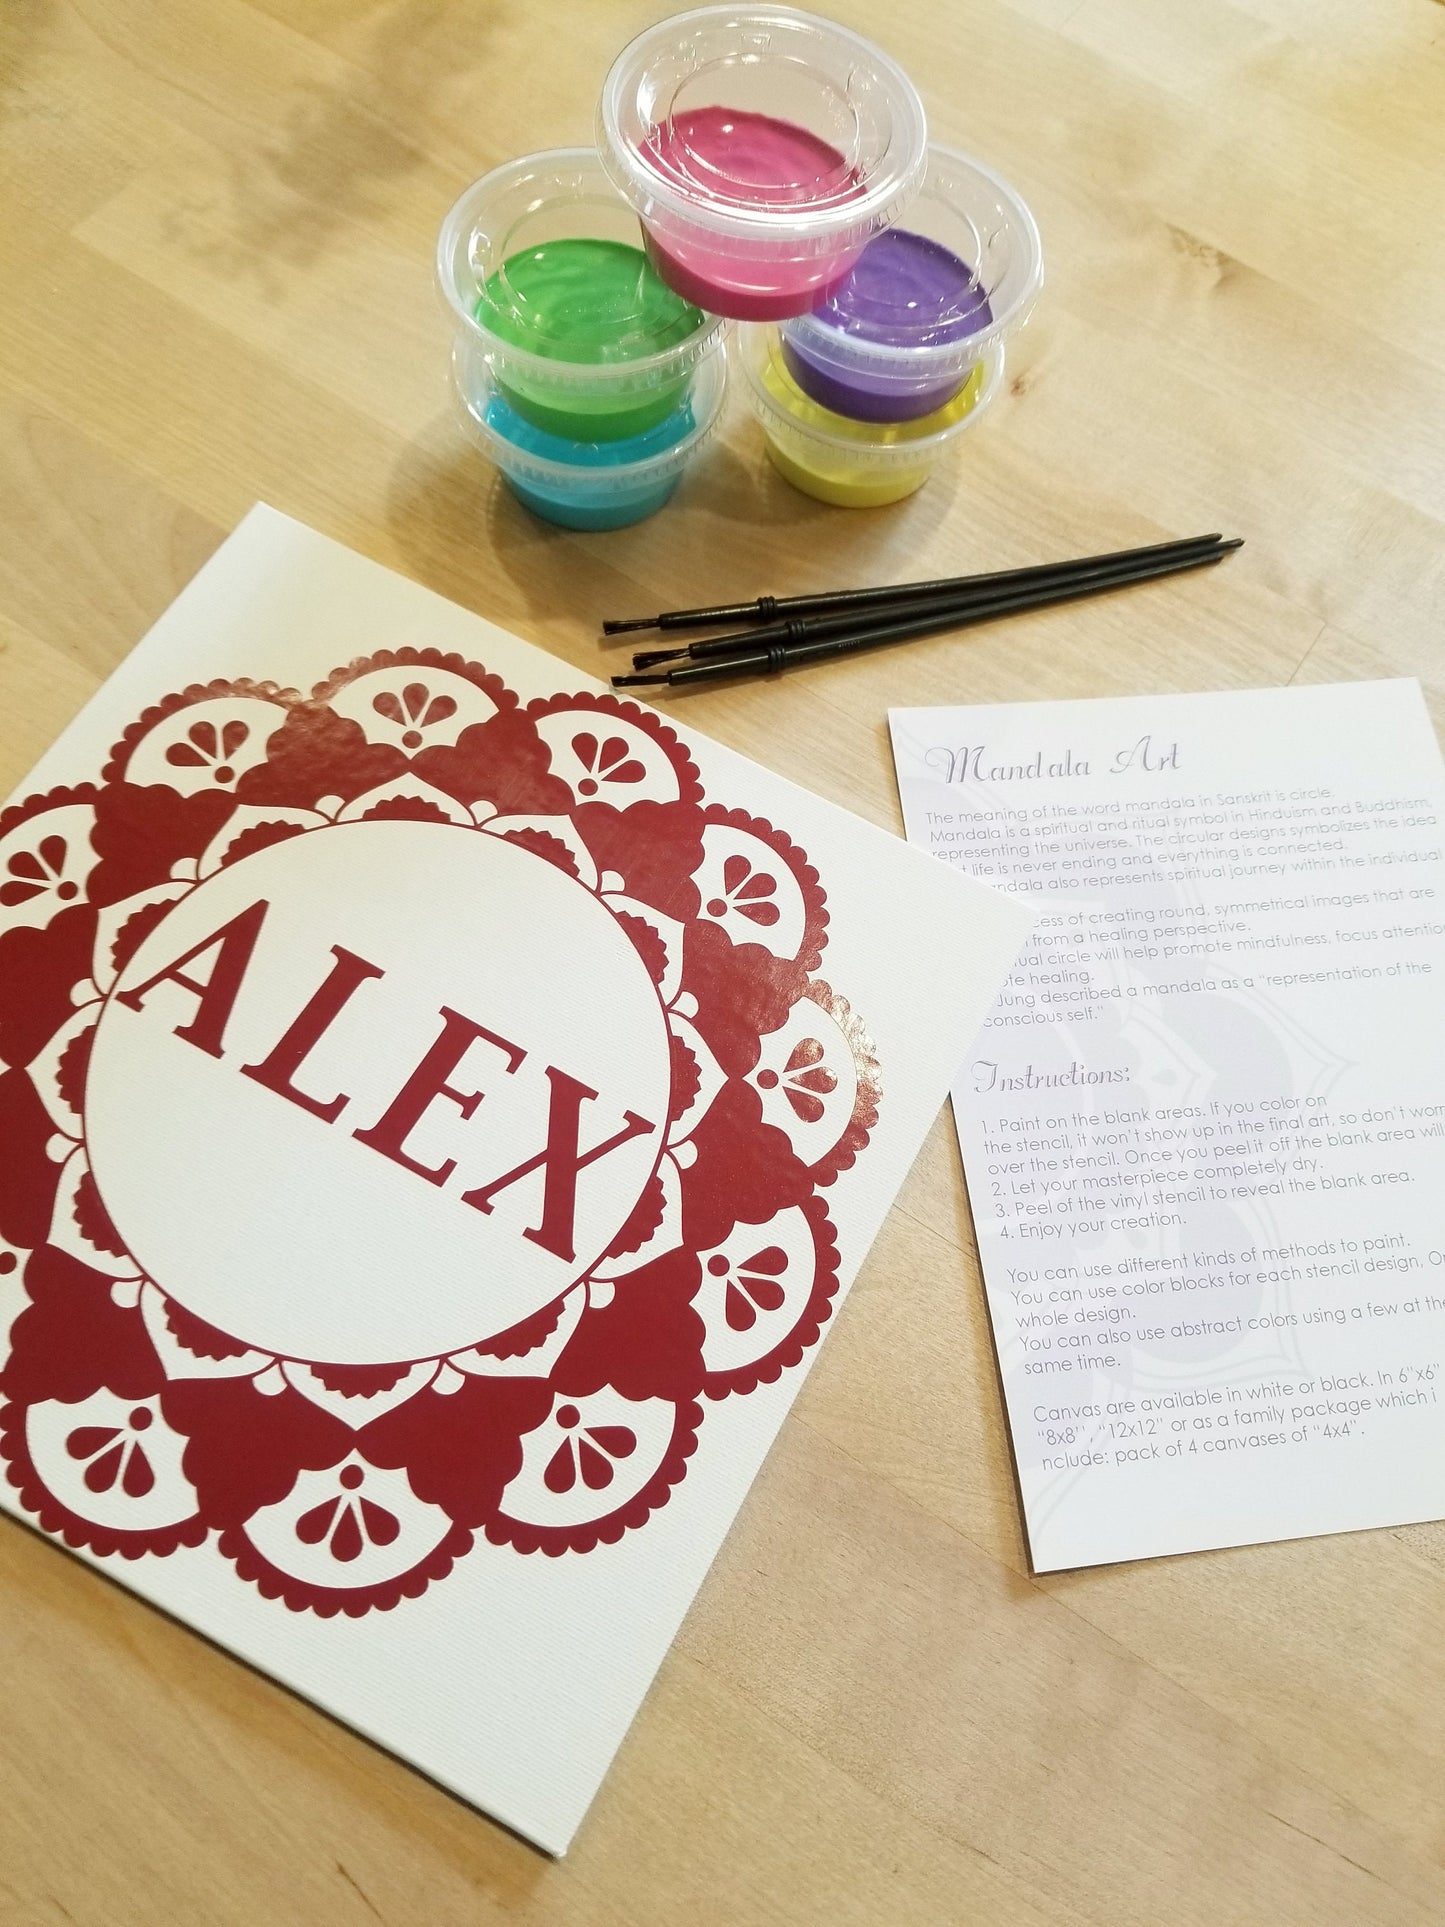 DIY Mandala art kit, personalized do it yourself painting kit for kids.